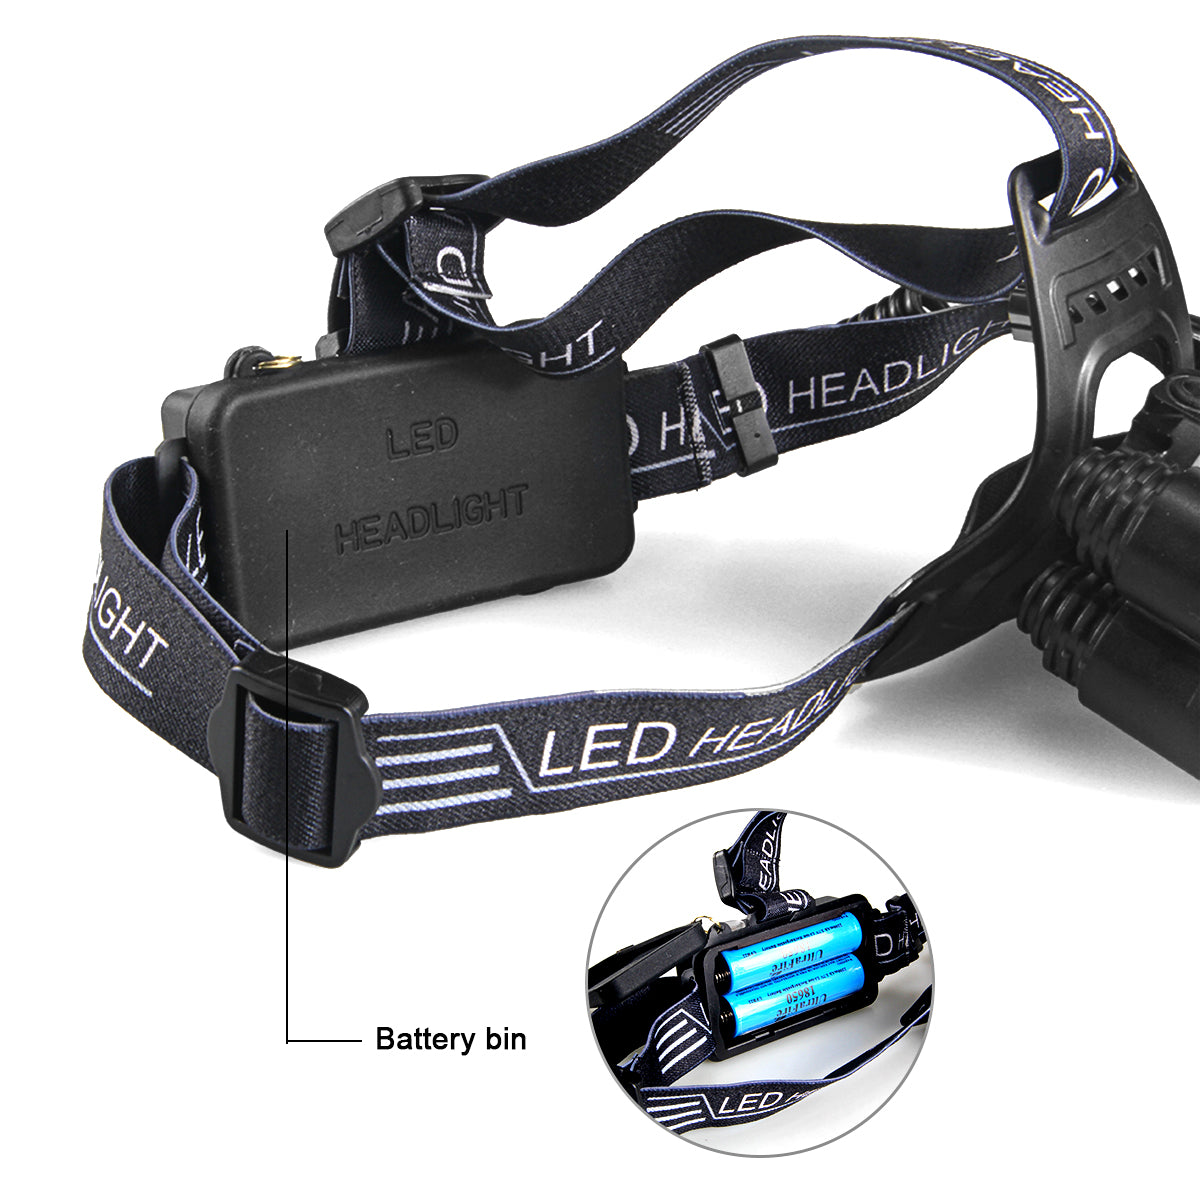 Ultrafire 3006-A1 1800 Lumens Led Rechargeable Light Sensitive Headlamp